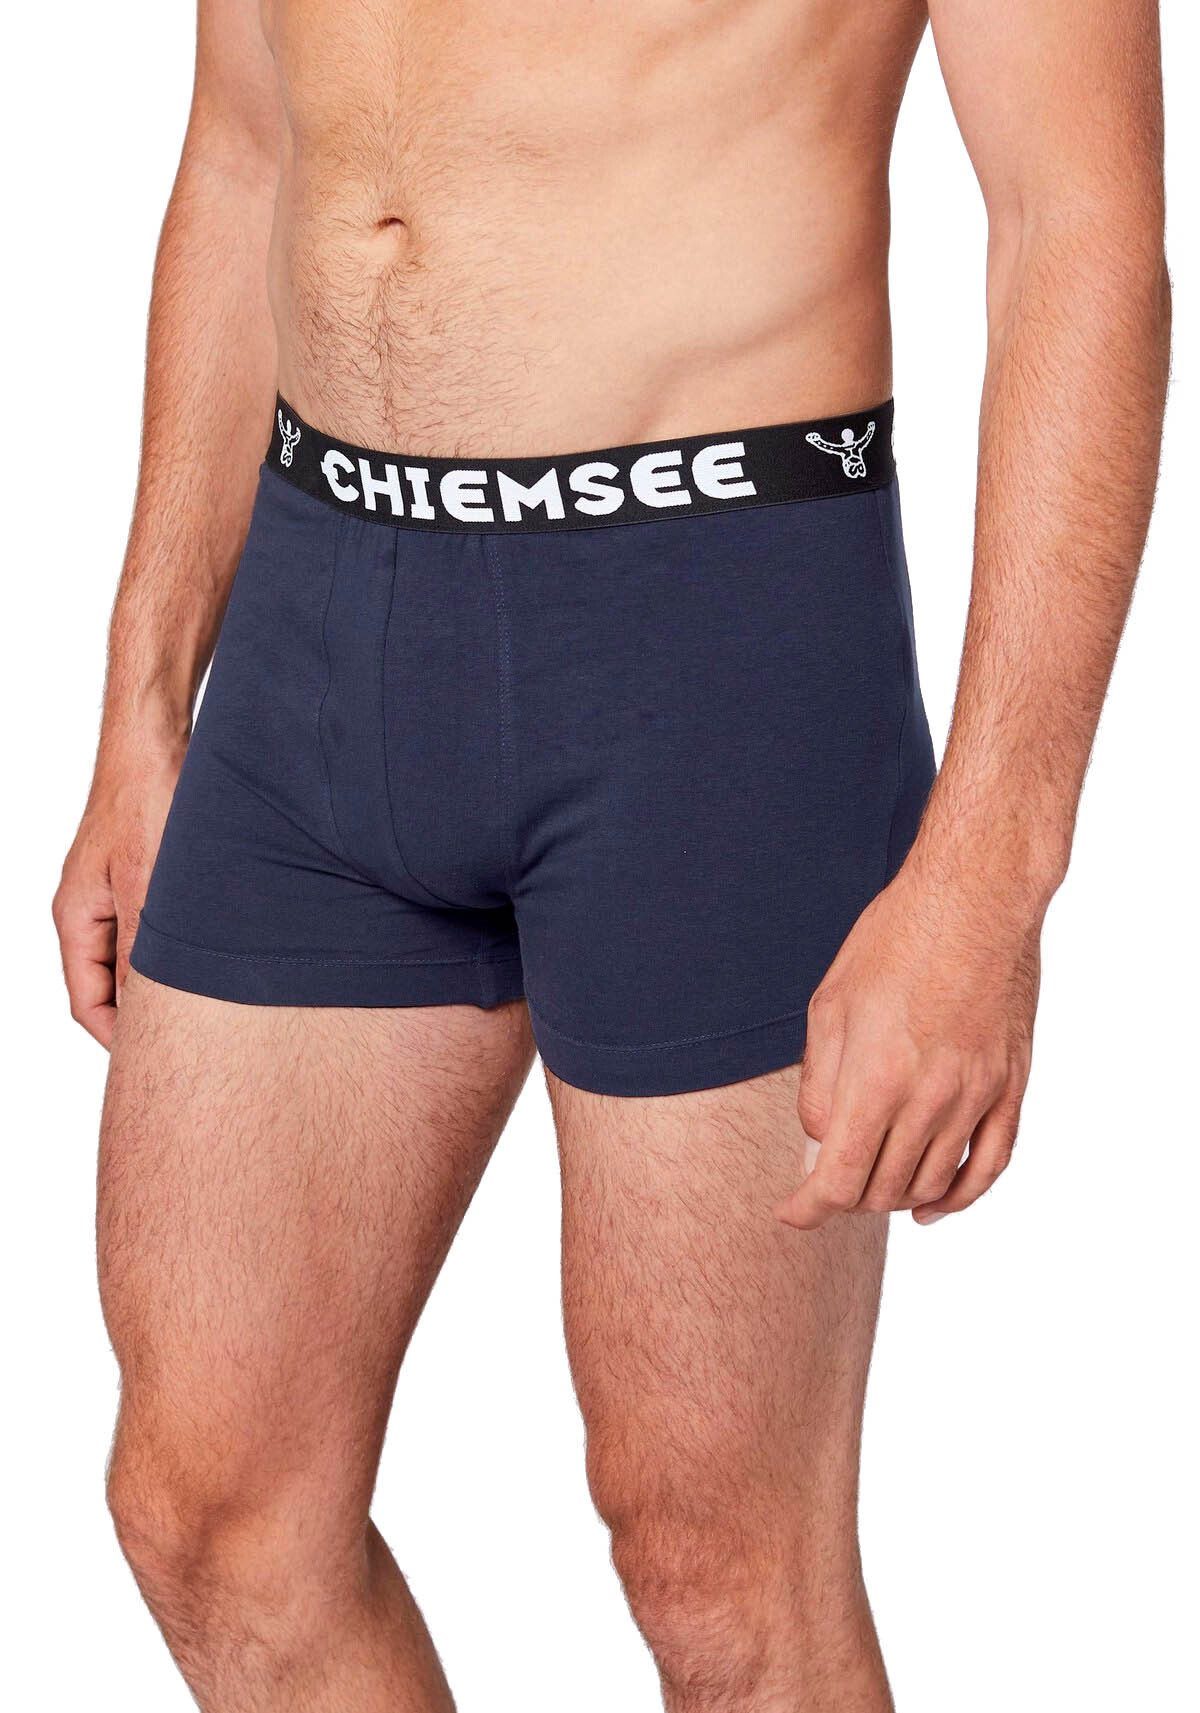 Chiemsee Boxer Herren Dunkelblau Logobund Pack - Shorts, Boxershorts, 6er